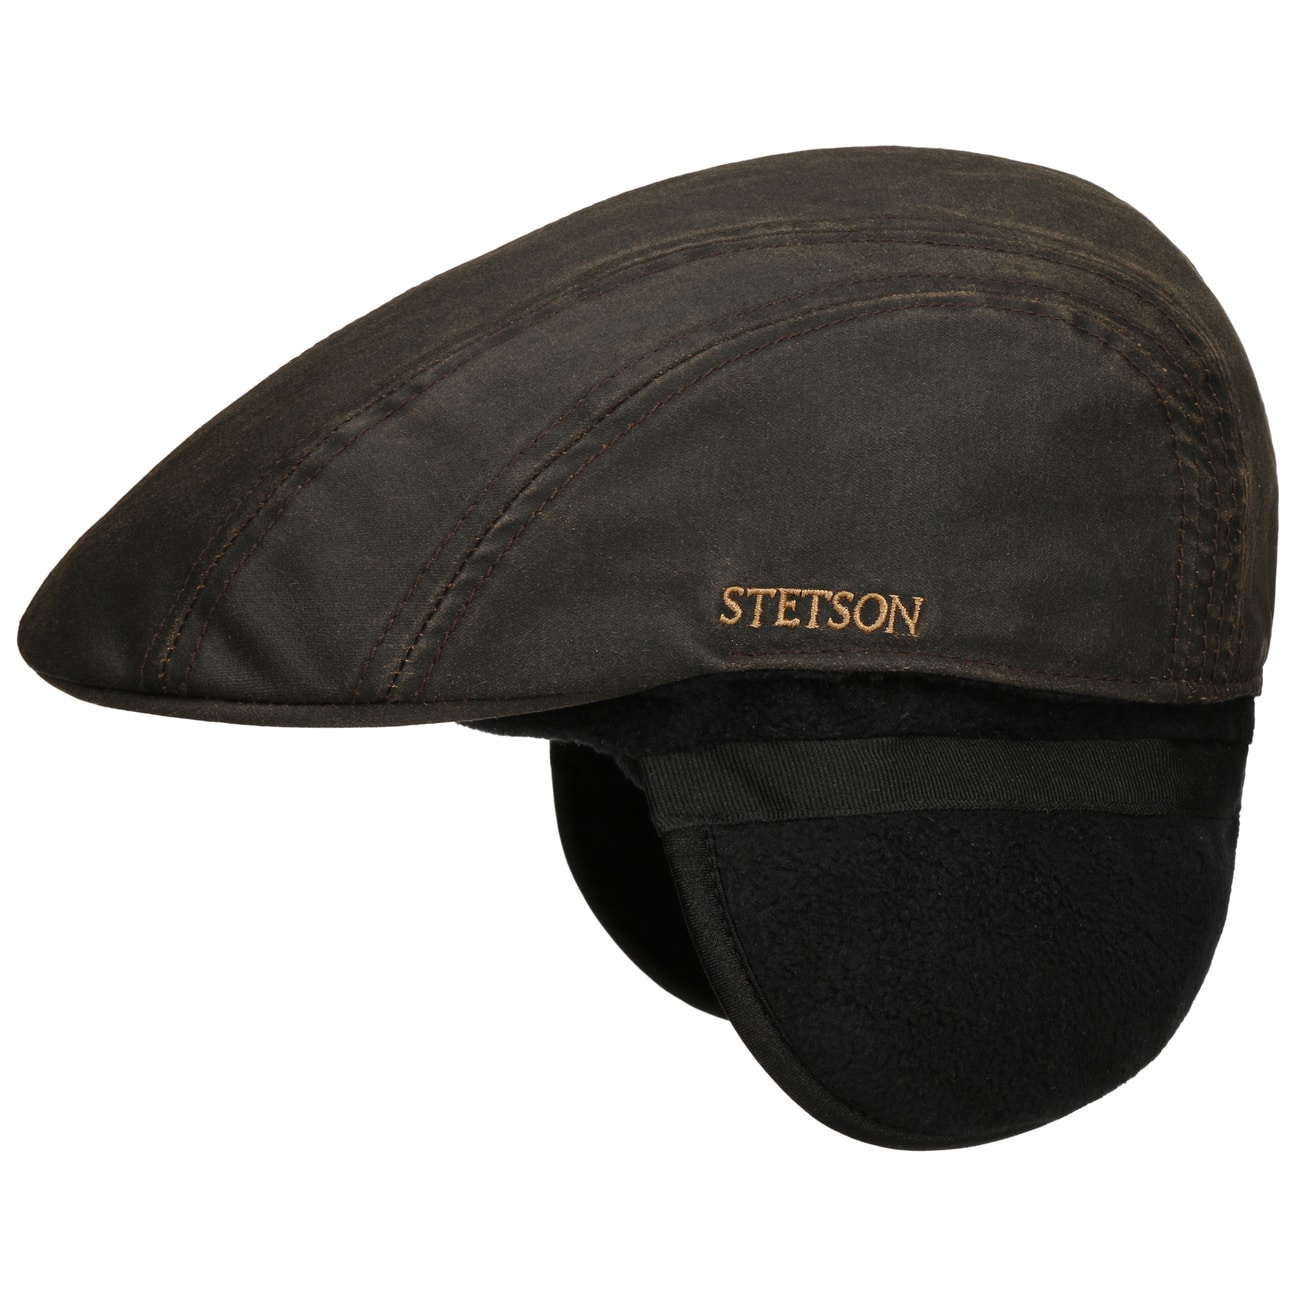 Stetson 6161106 6 Old cotton ear flap flat cap